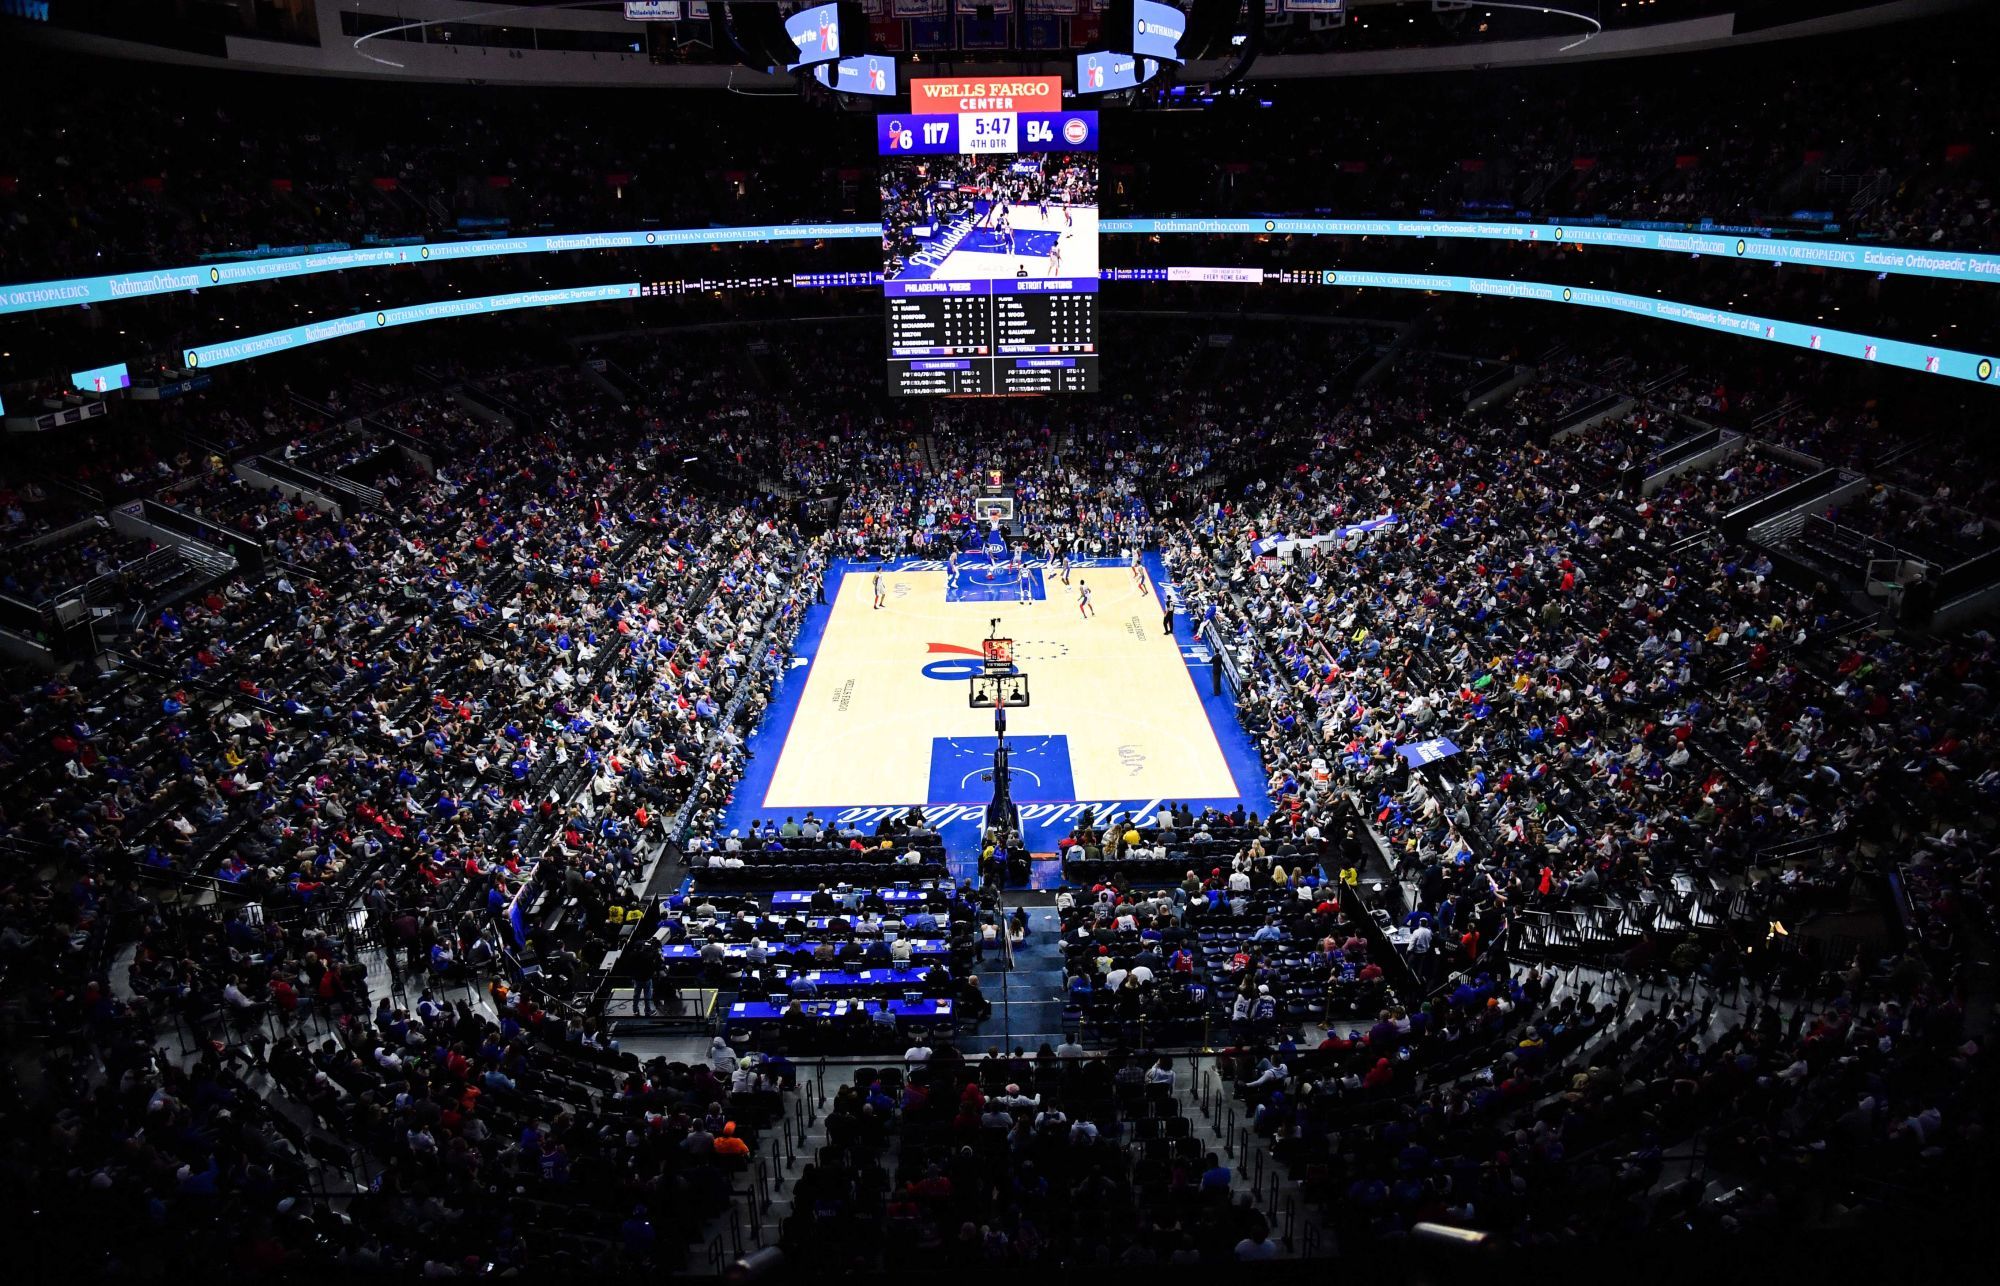 Photo by Icon Sport - Wells Fargo Center - Philadelphia (Etats Unis) NBA